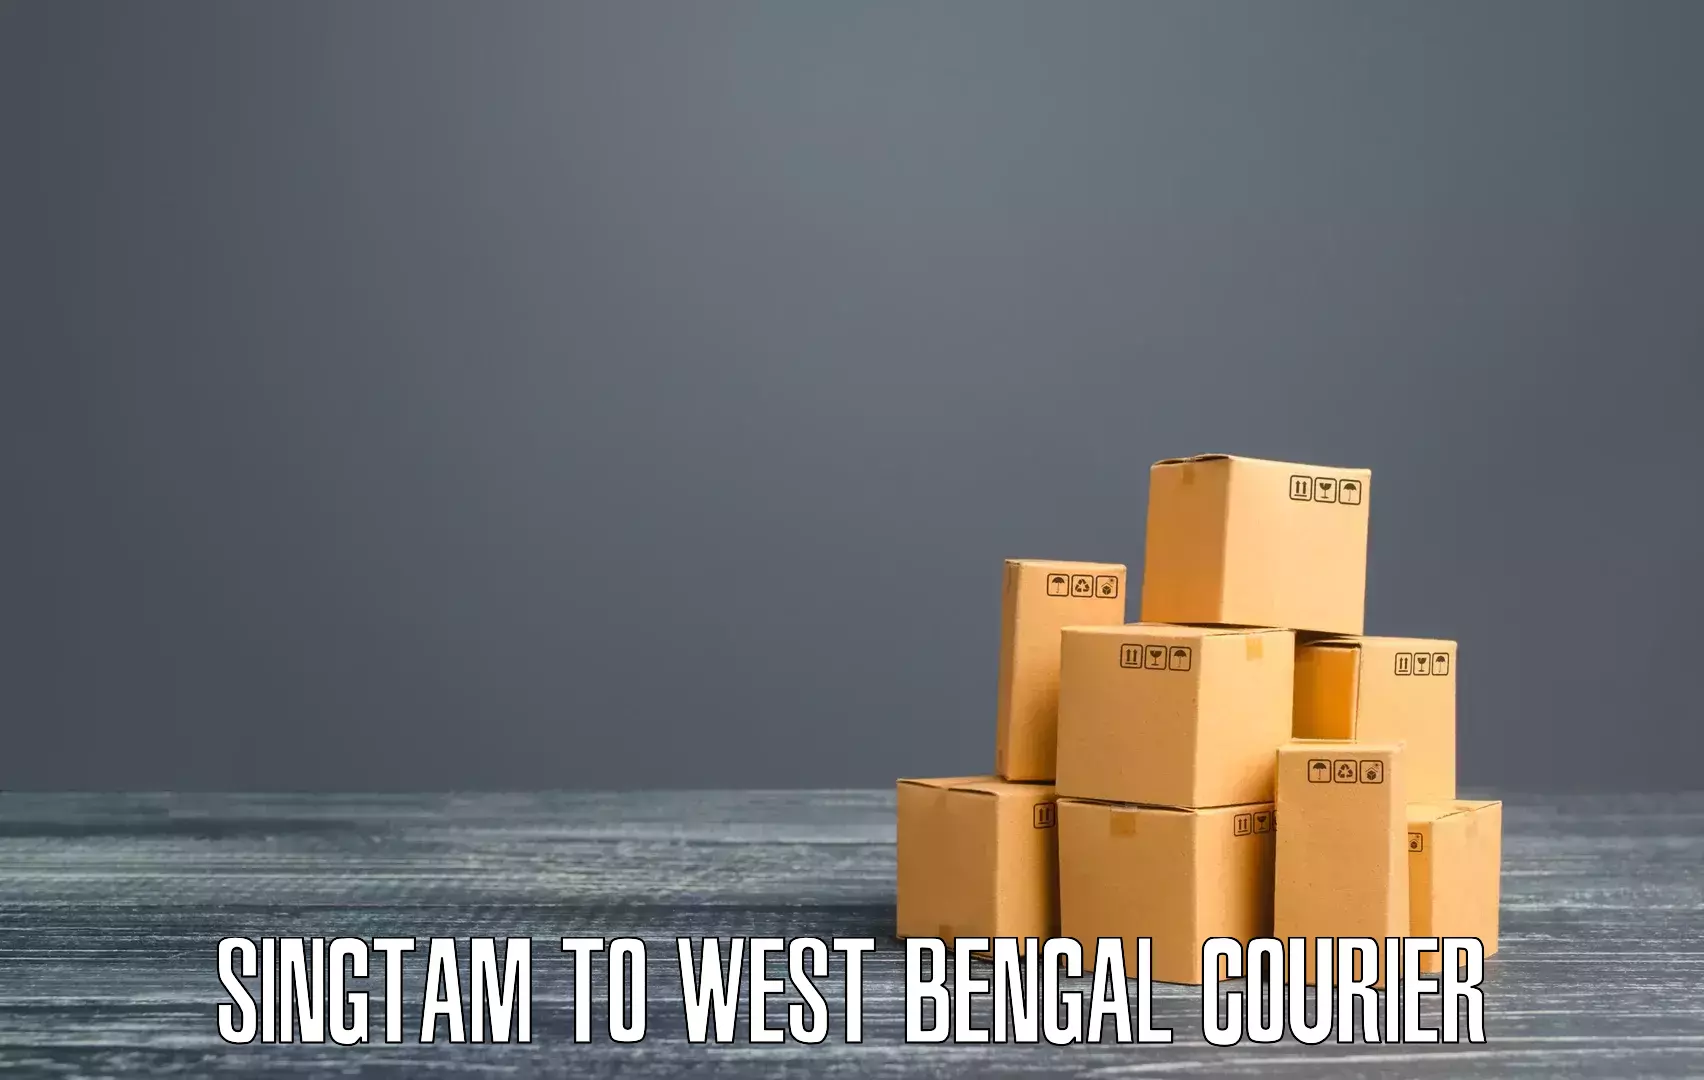 Efficient order fulfillment Singtam to West Bengal